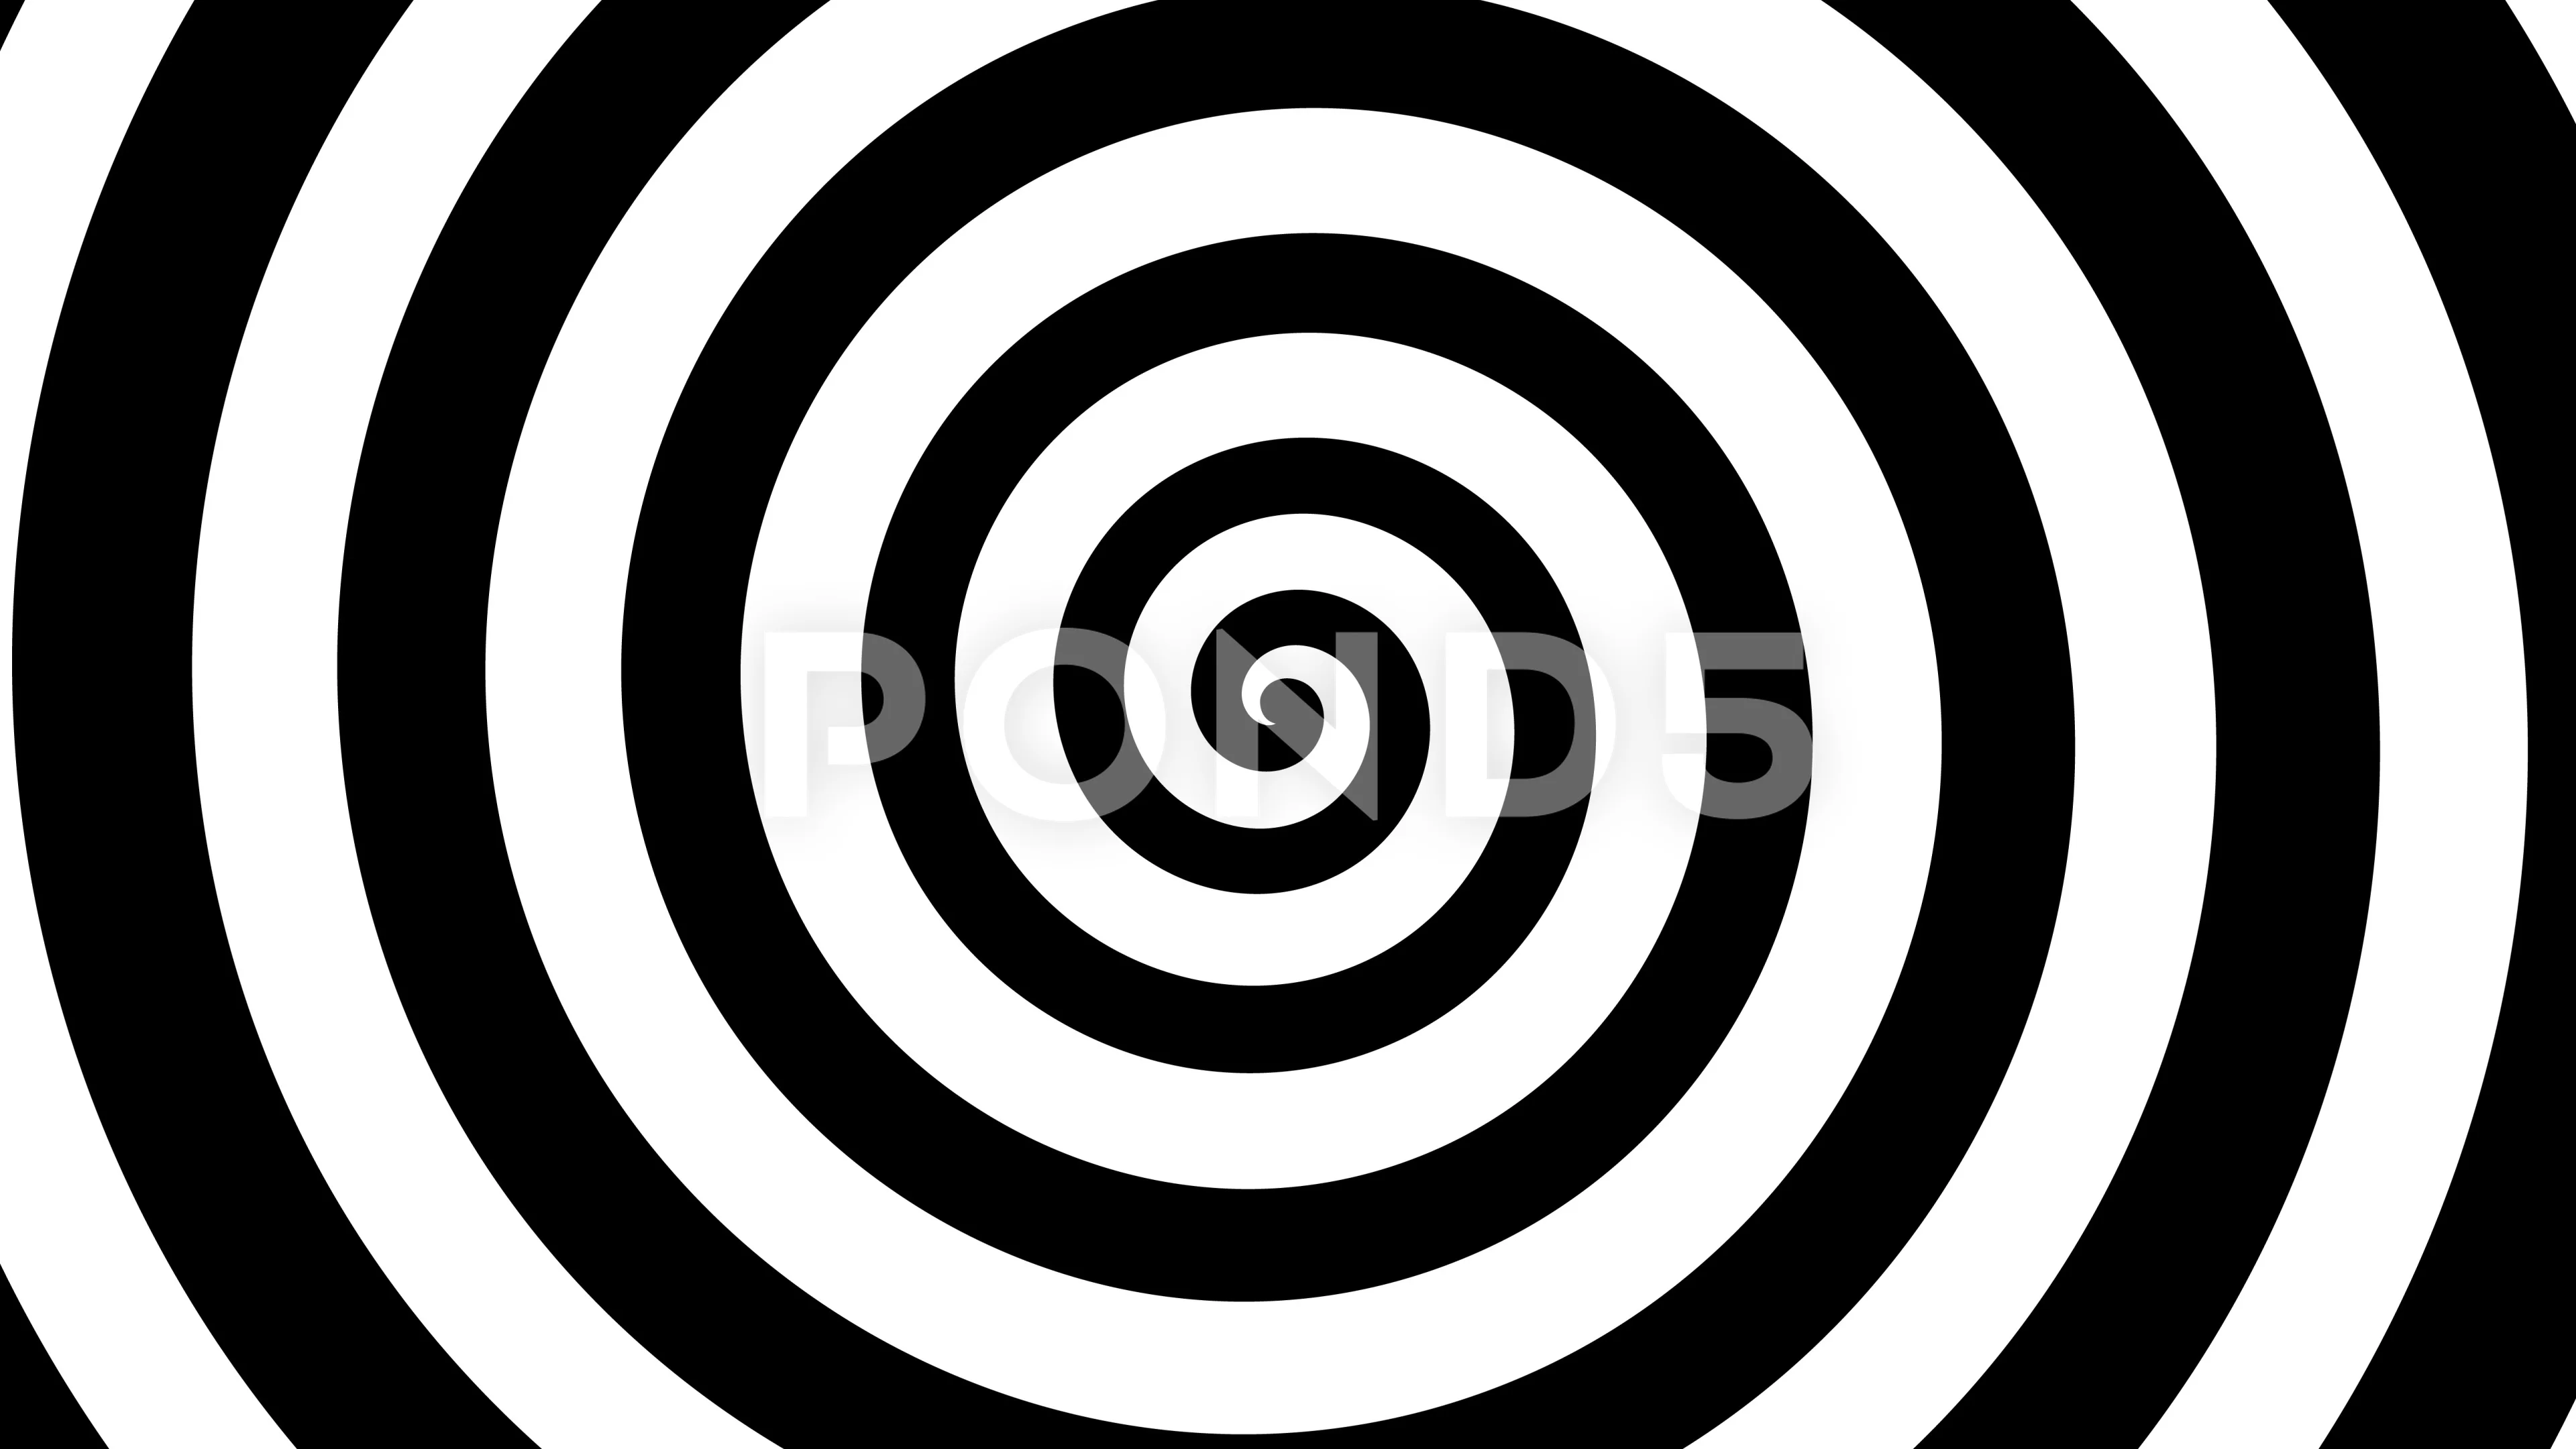 moving hypnotic spiral